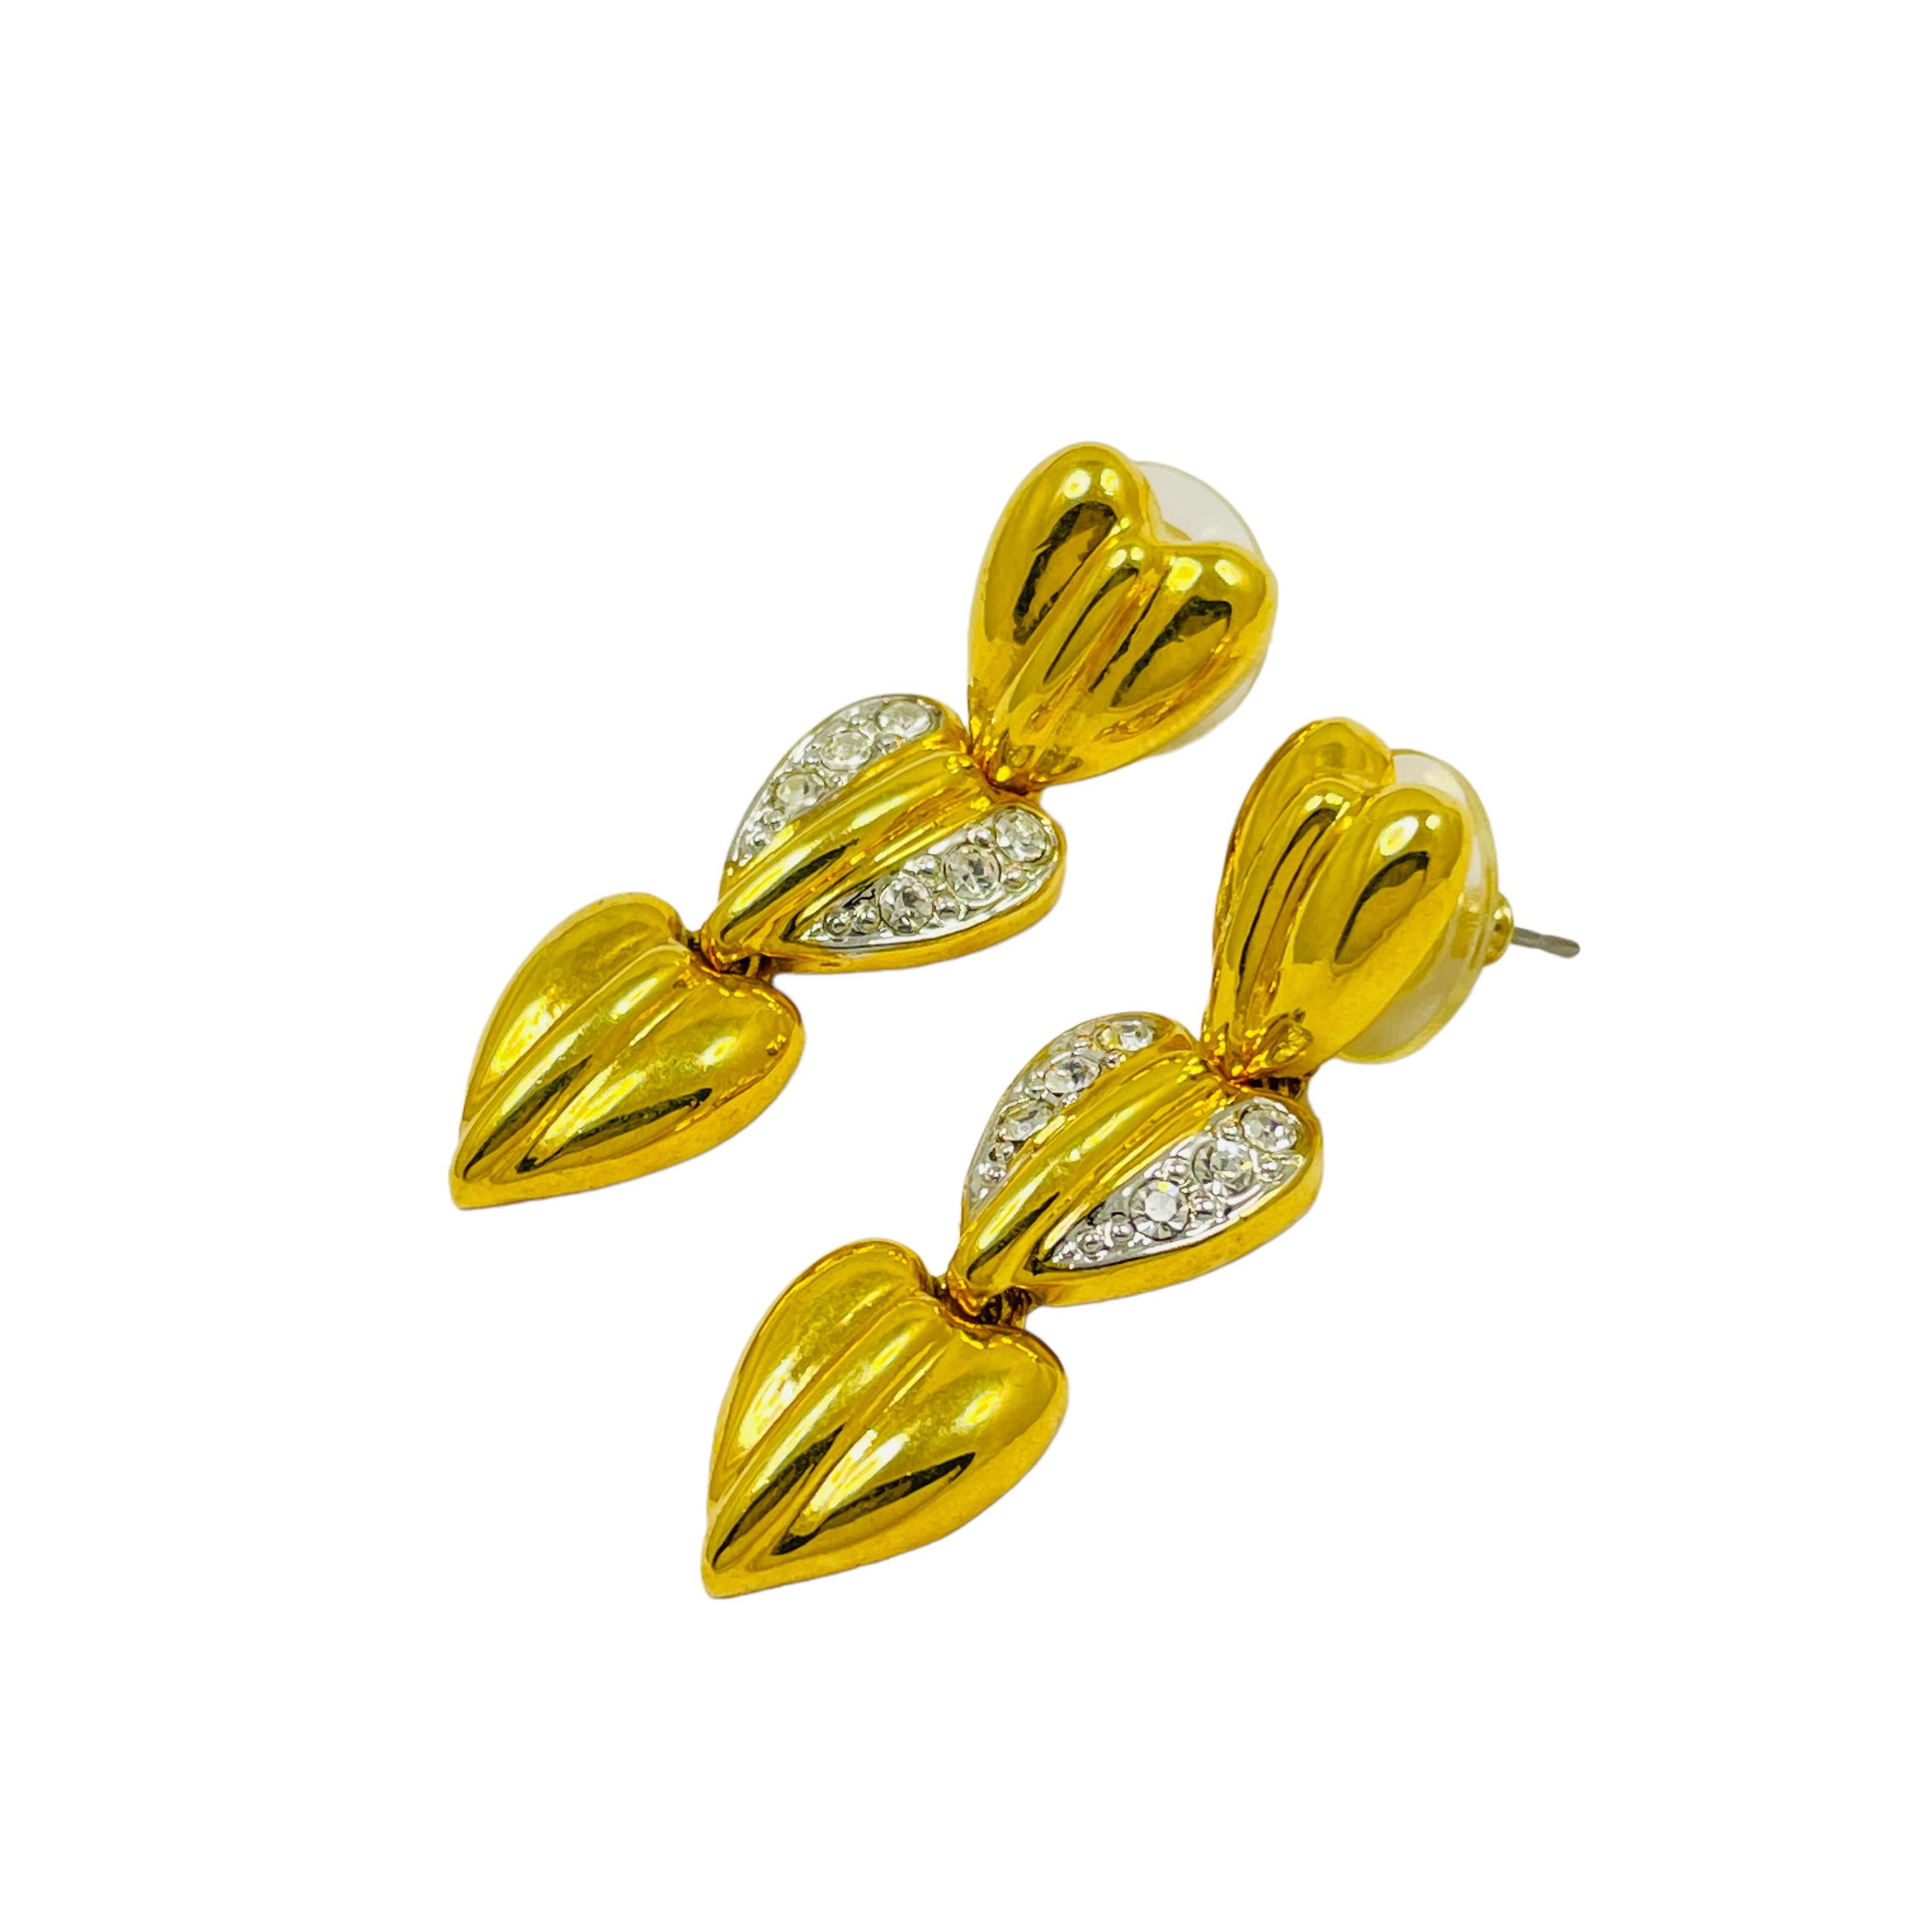 DETAILS

• unsigned

• gold tone with rhinestones

• vintage designer pierced earrings

MEASUREMENTS

• 1.63